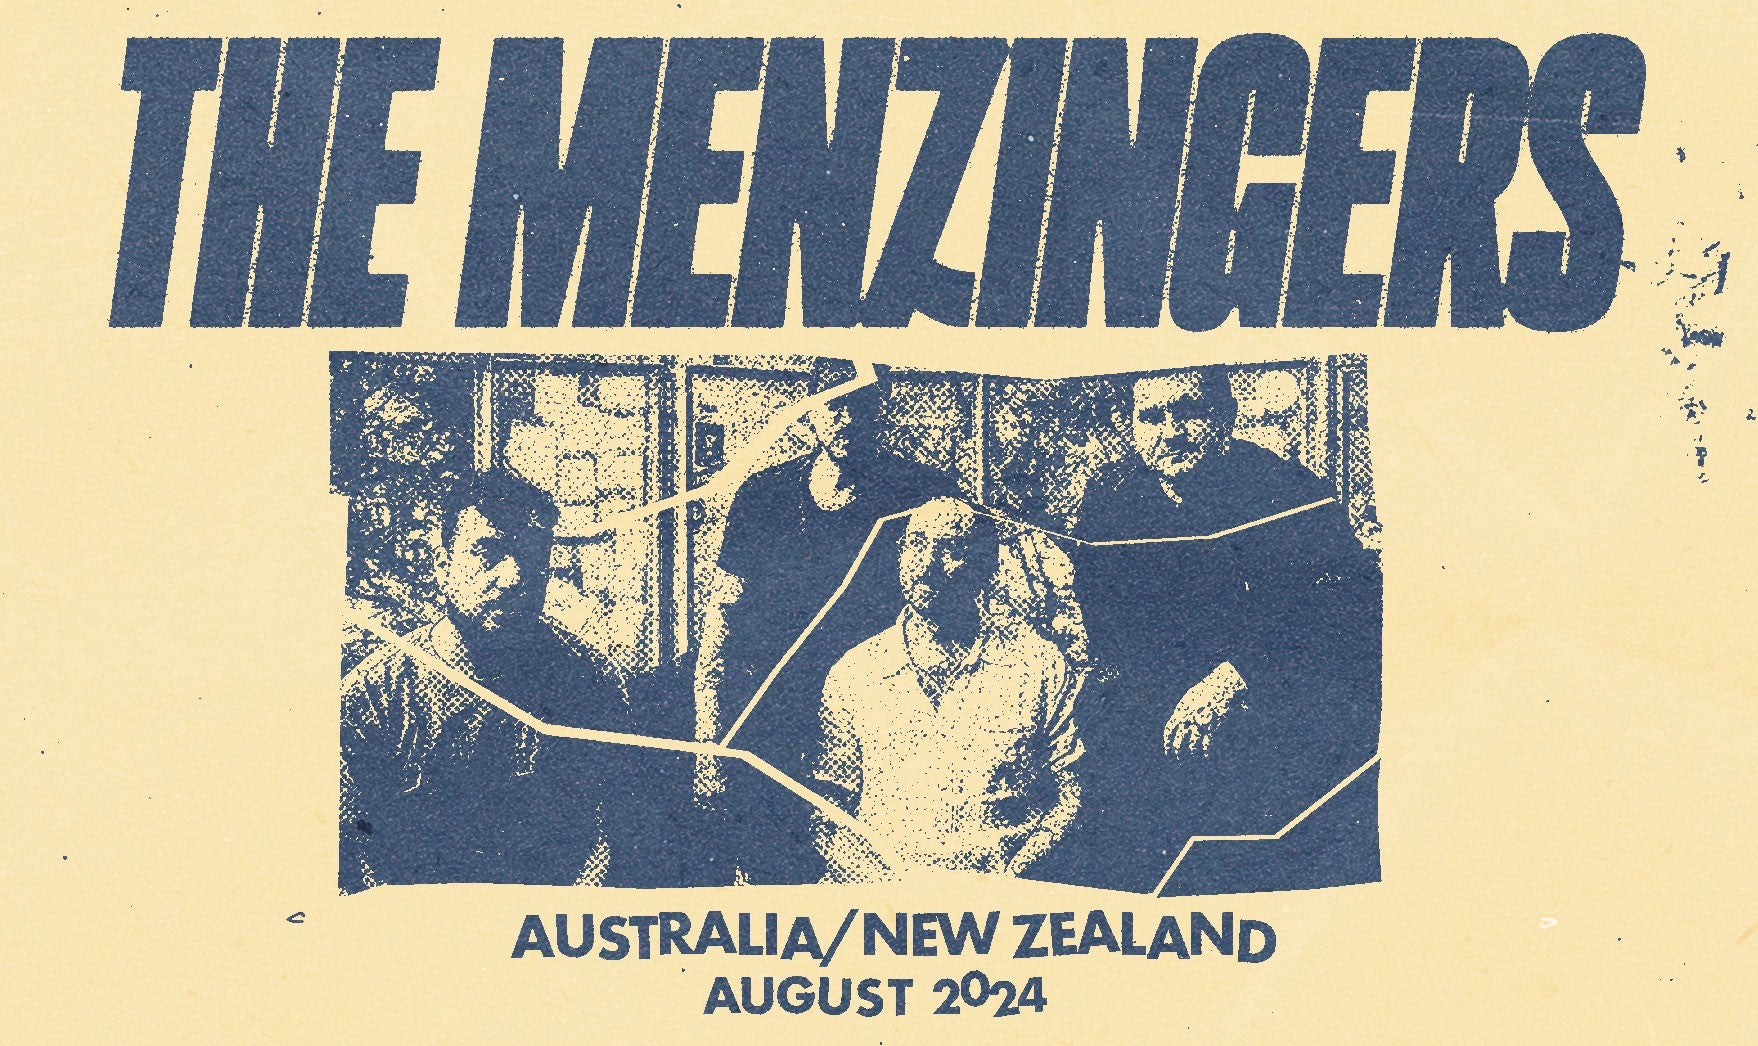 THE MENZINGERS - AUSTRALIA 2024